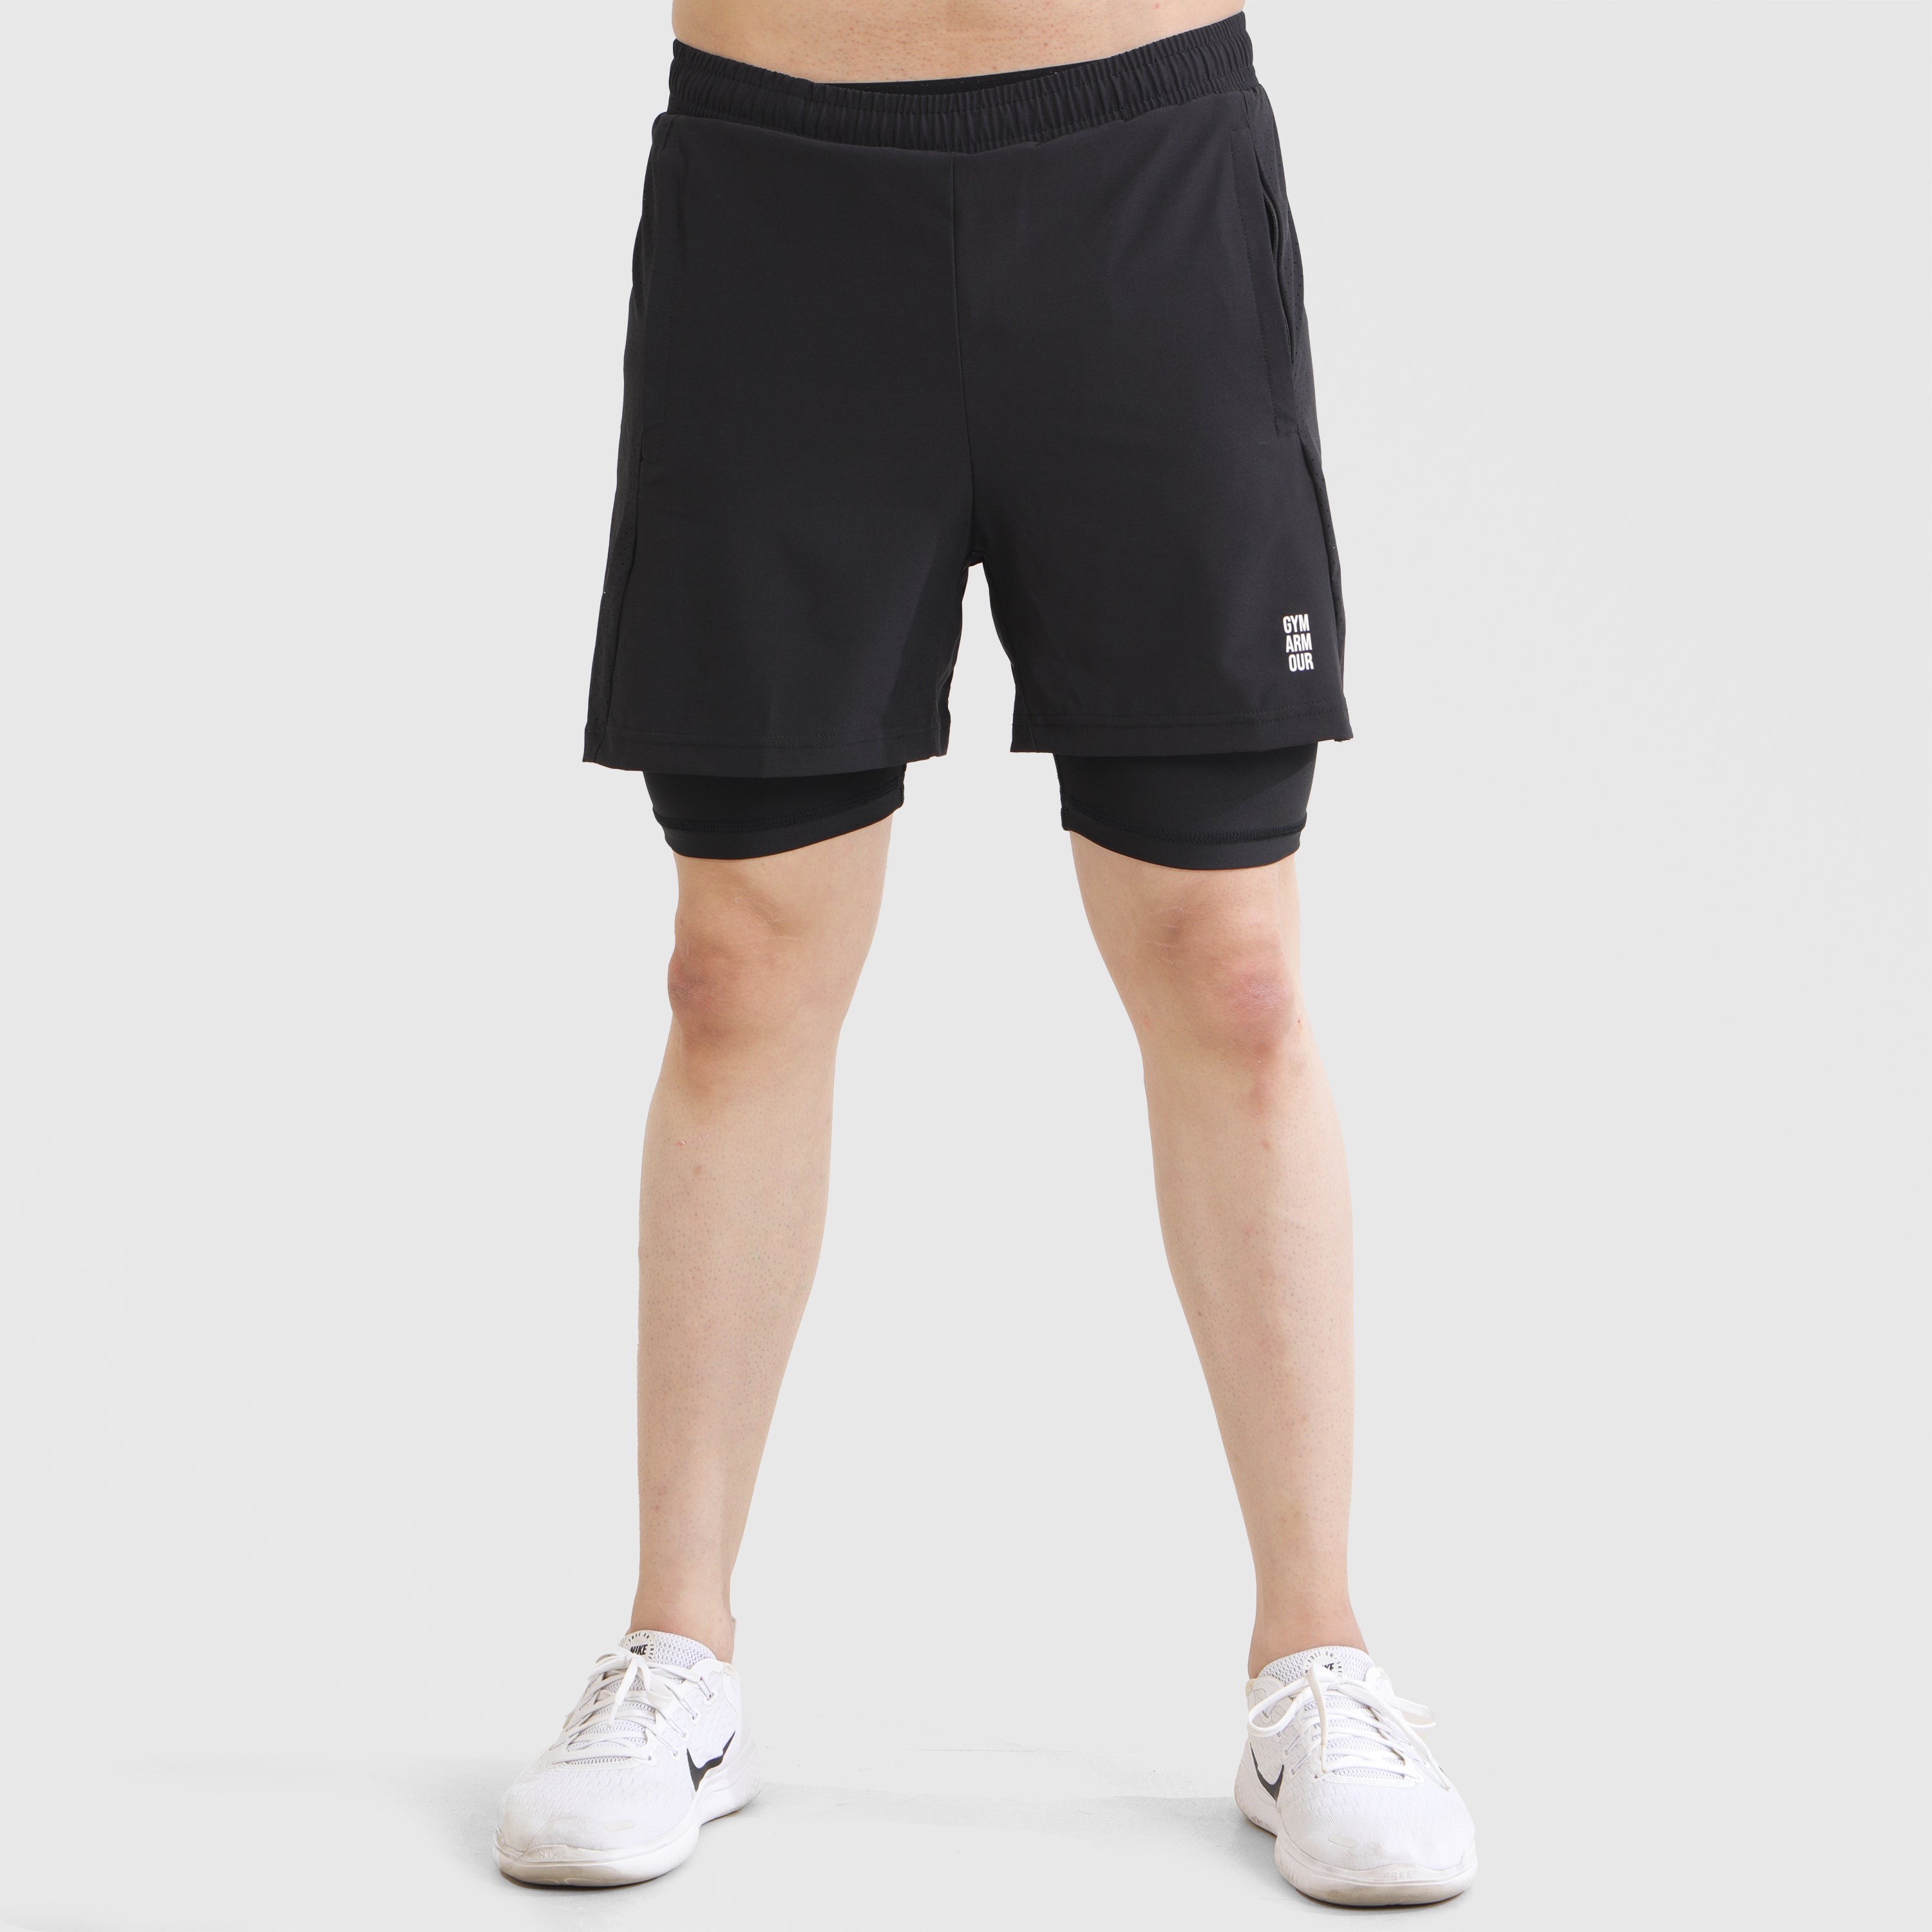 Laser Grip Shorts (Black)